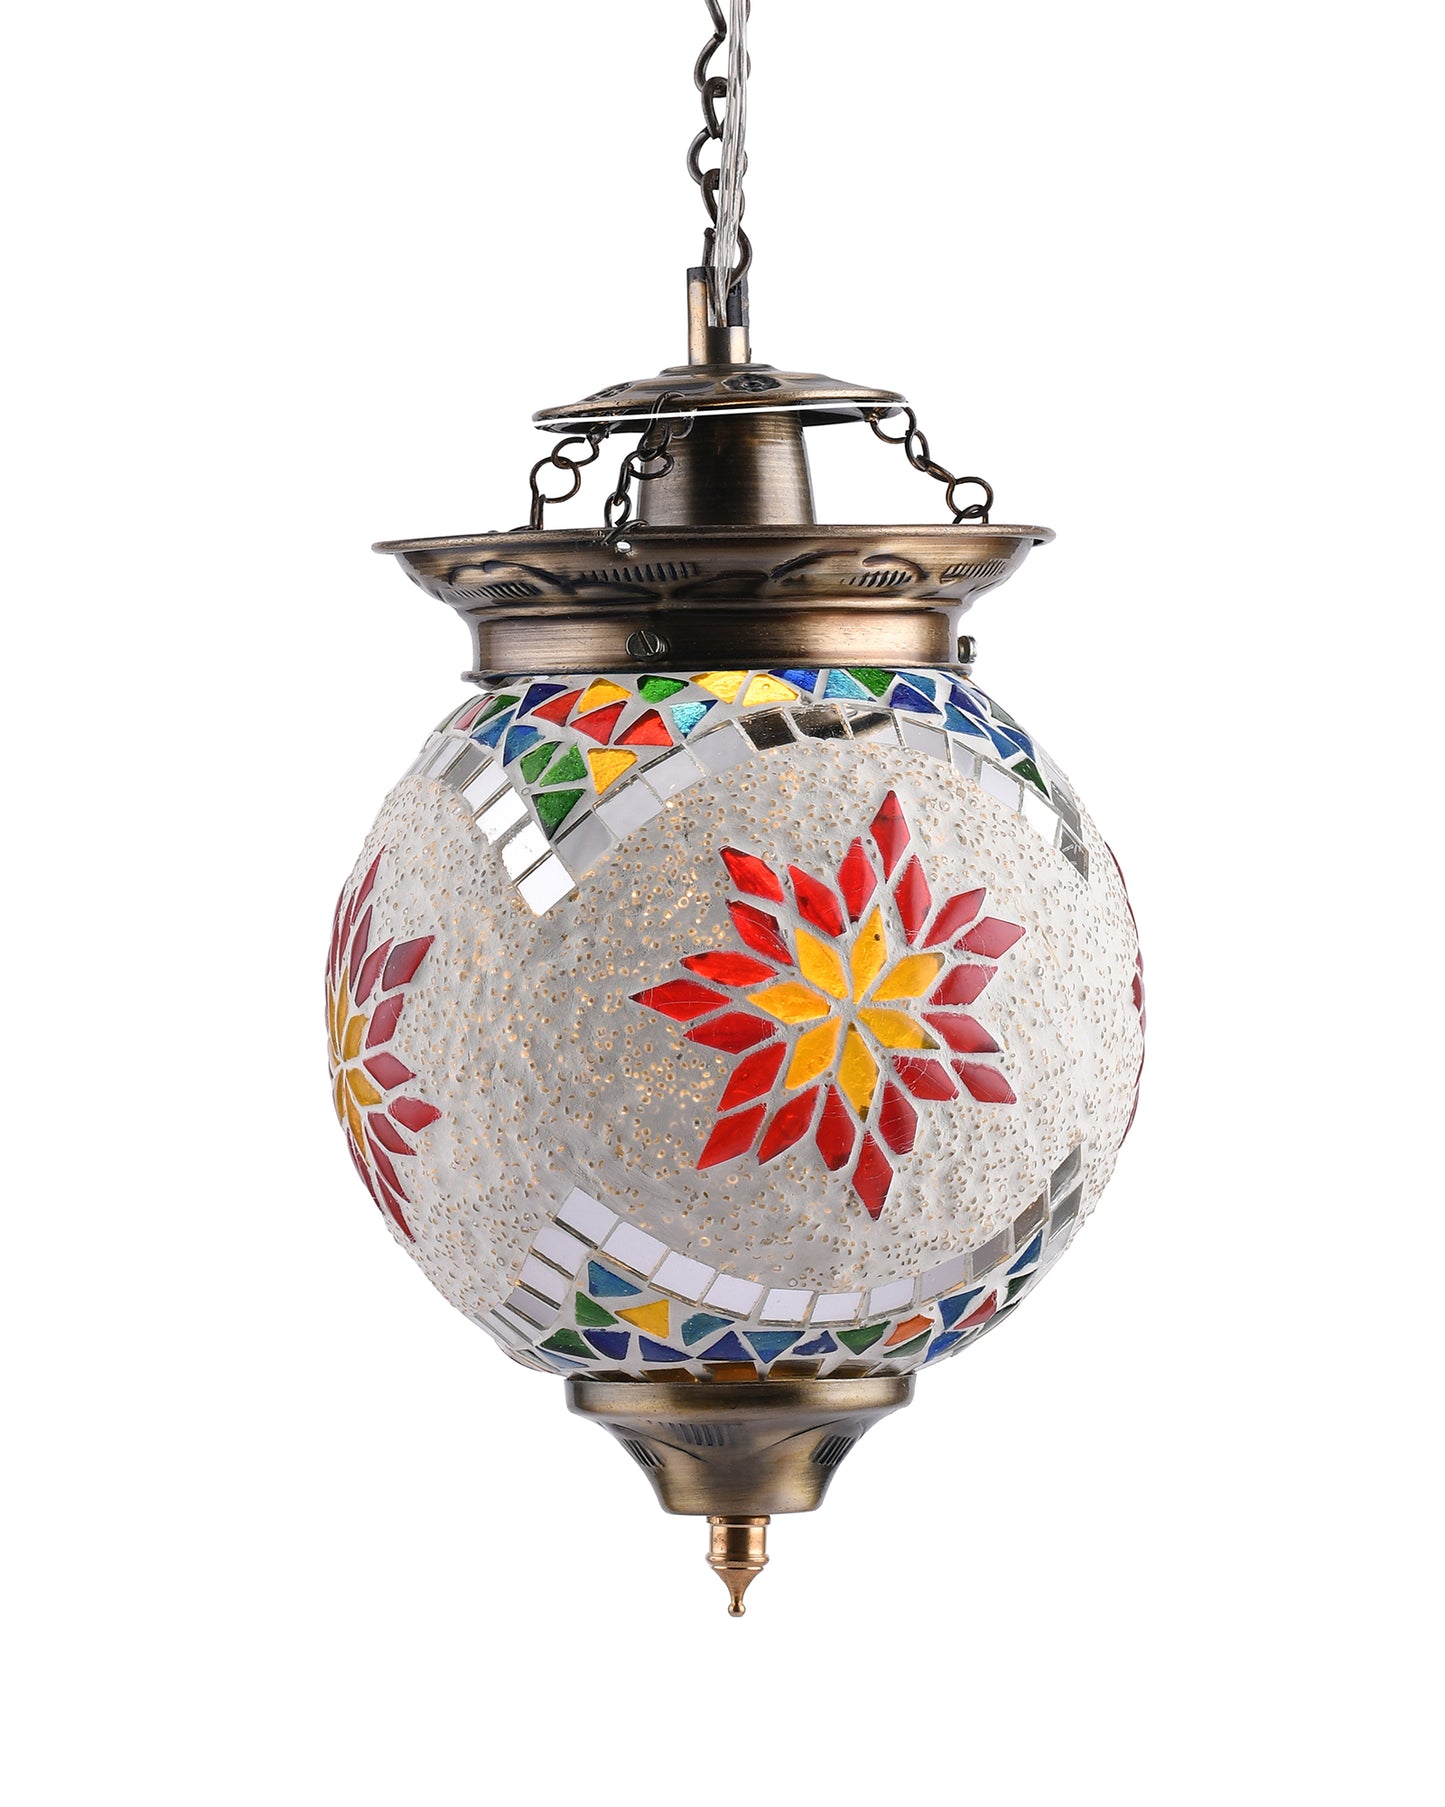 AntiqueTurkish Moroccan Mosaic Pendant with Metal hangings, Ceiling Hanging Light